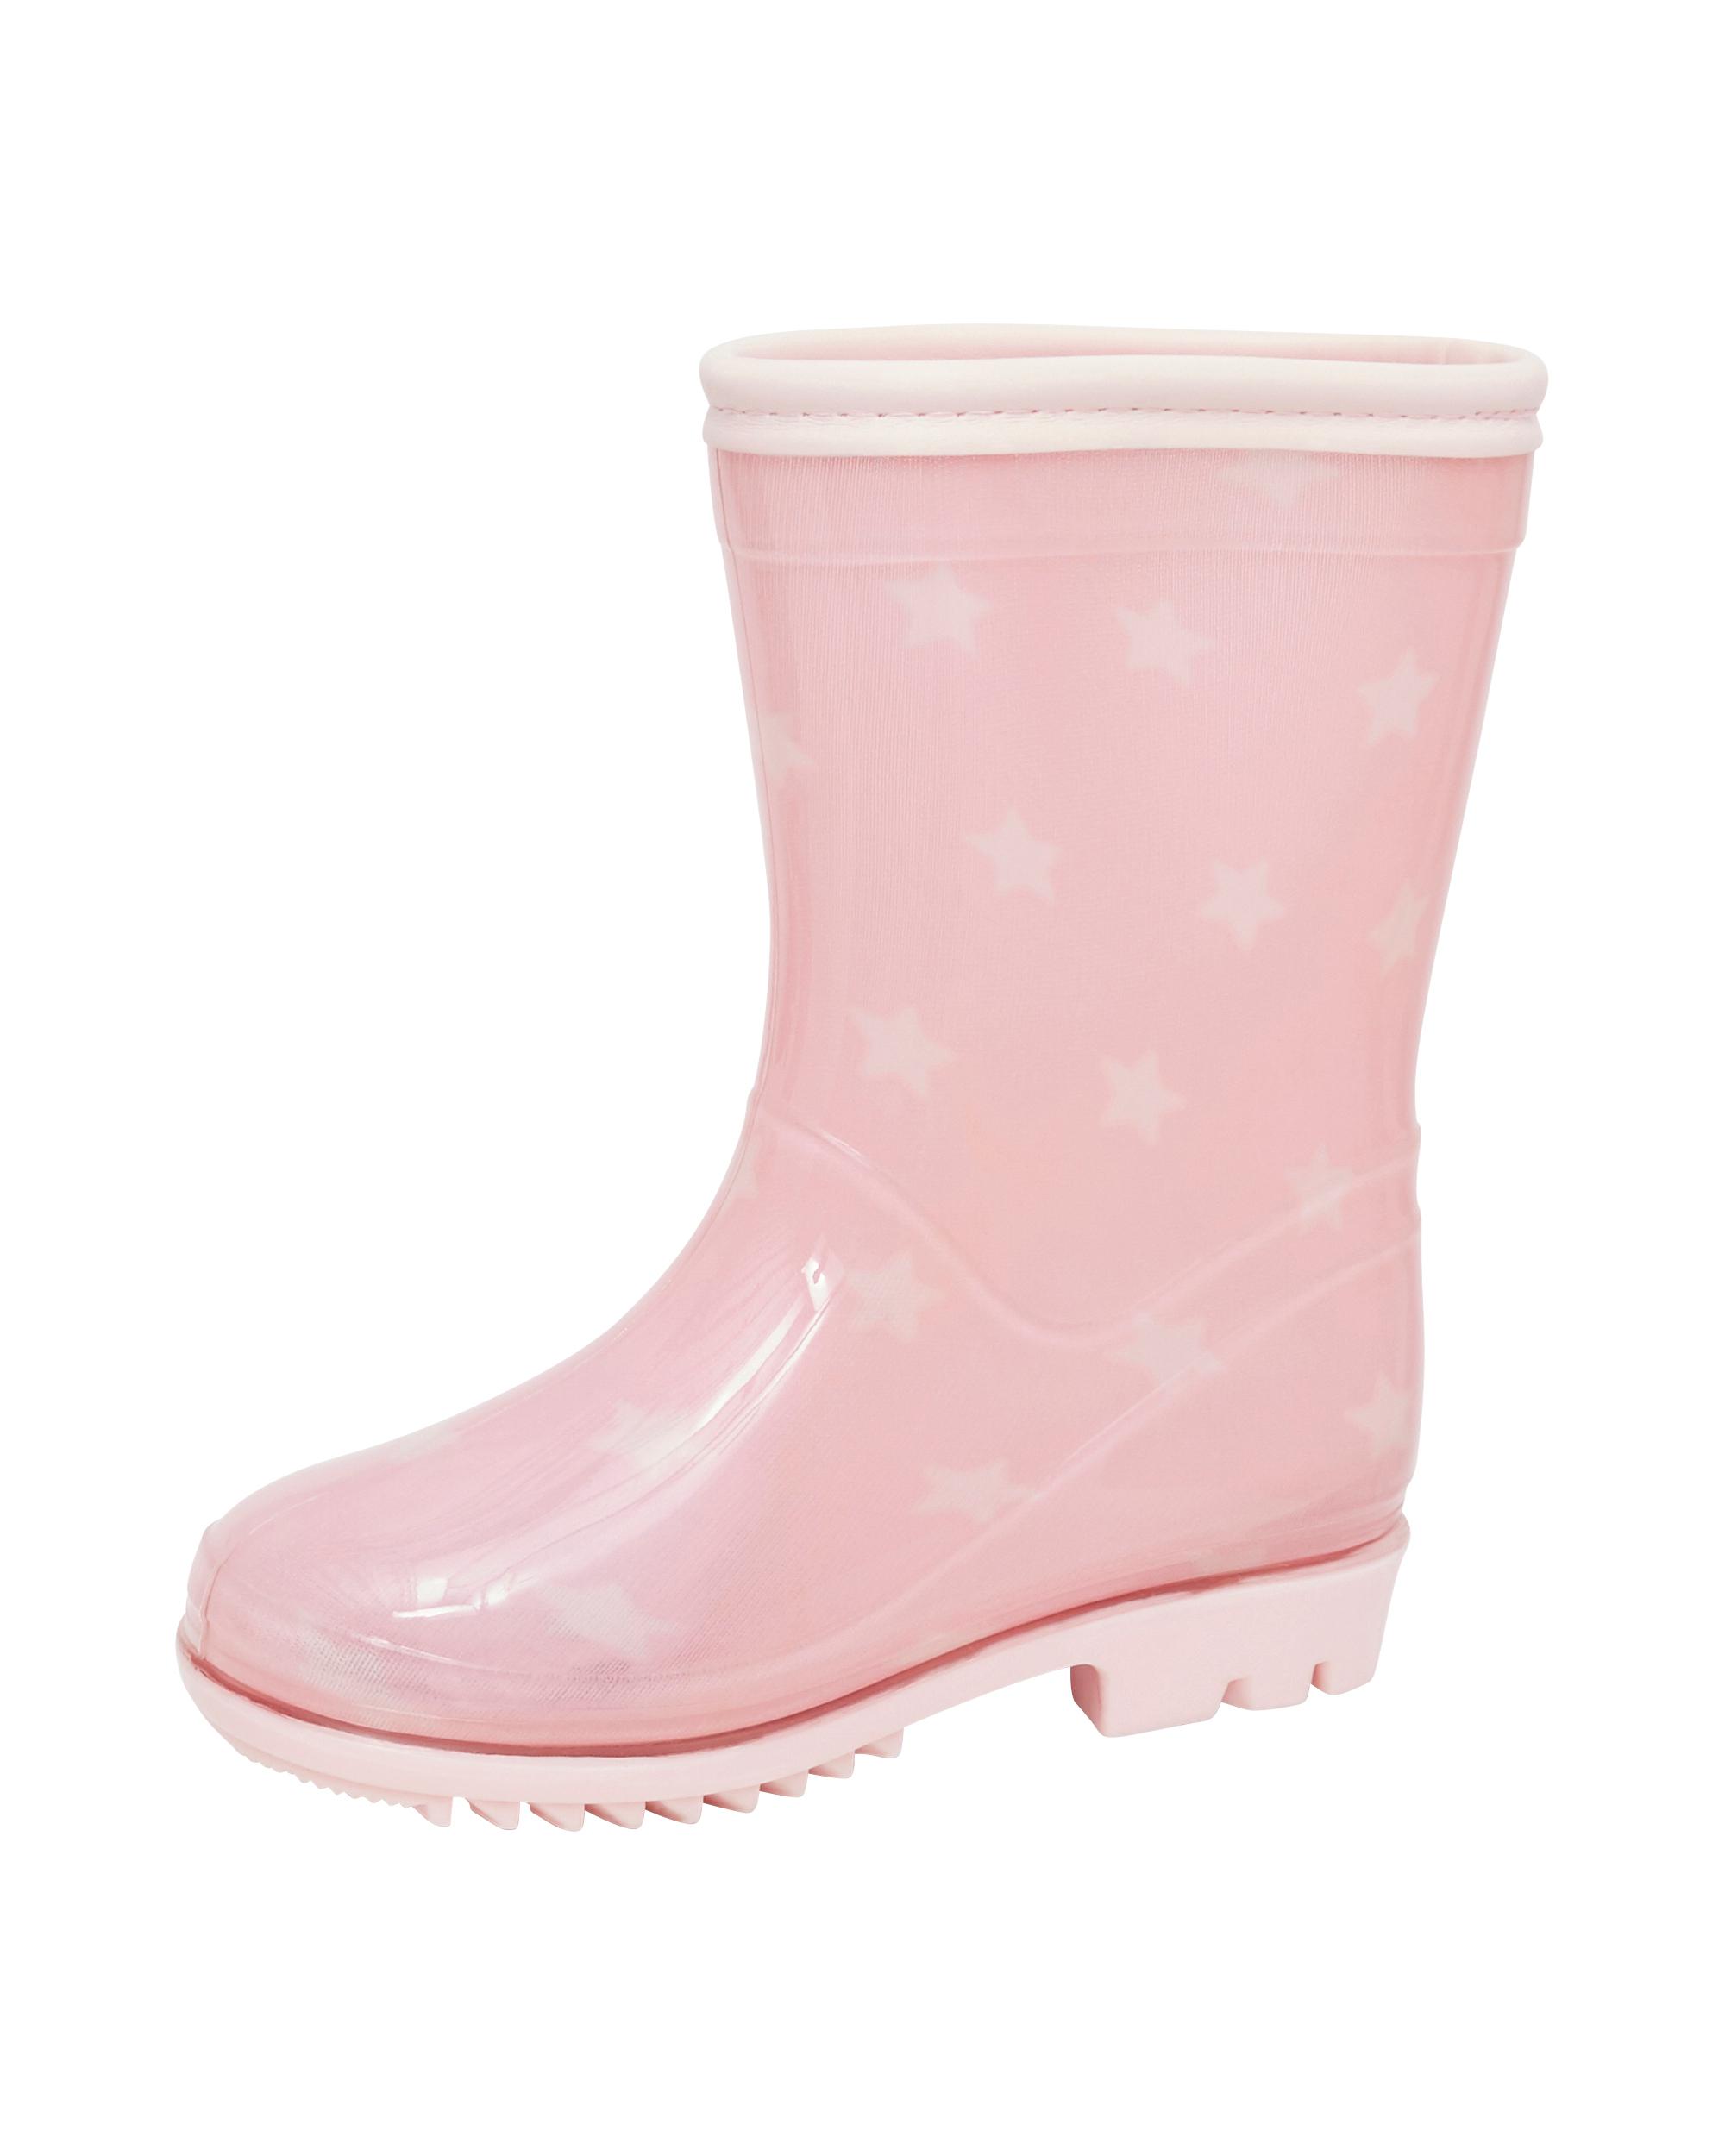 Toddler Star Print Rain Boots